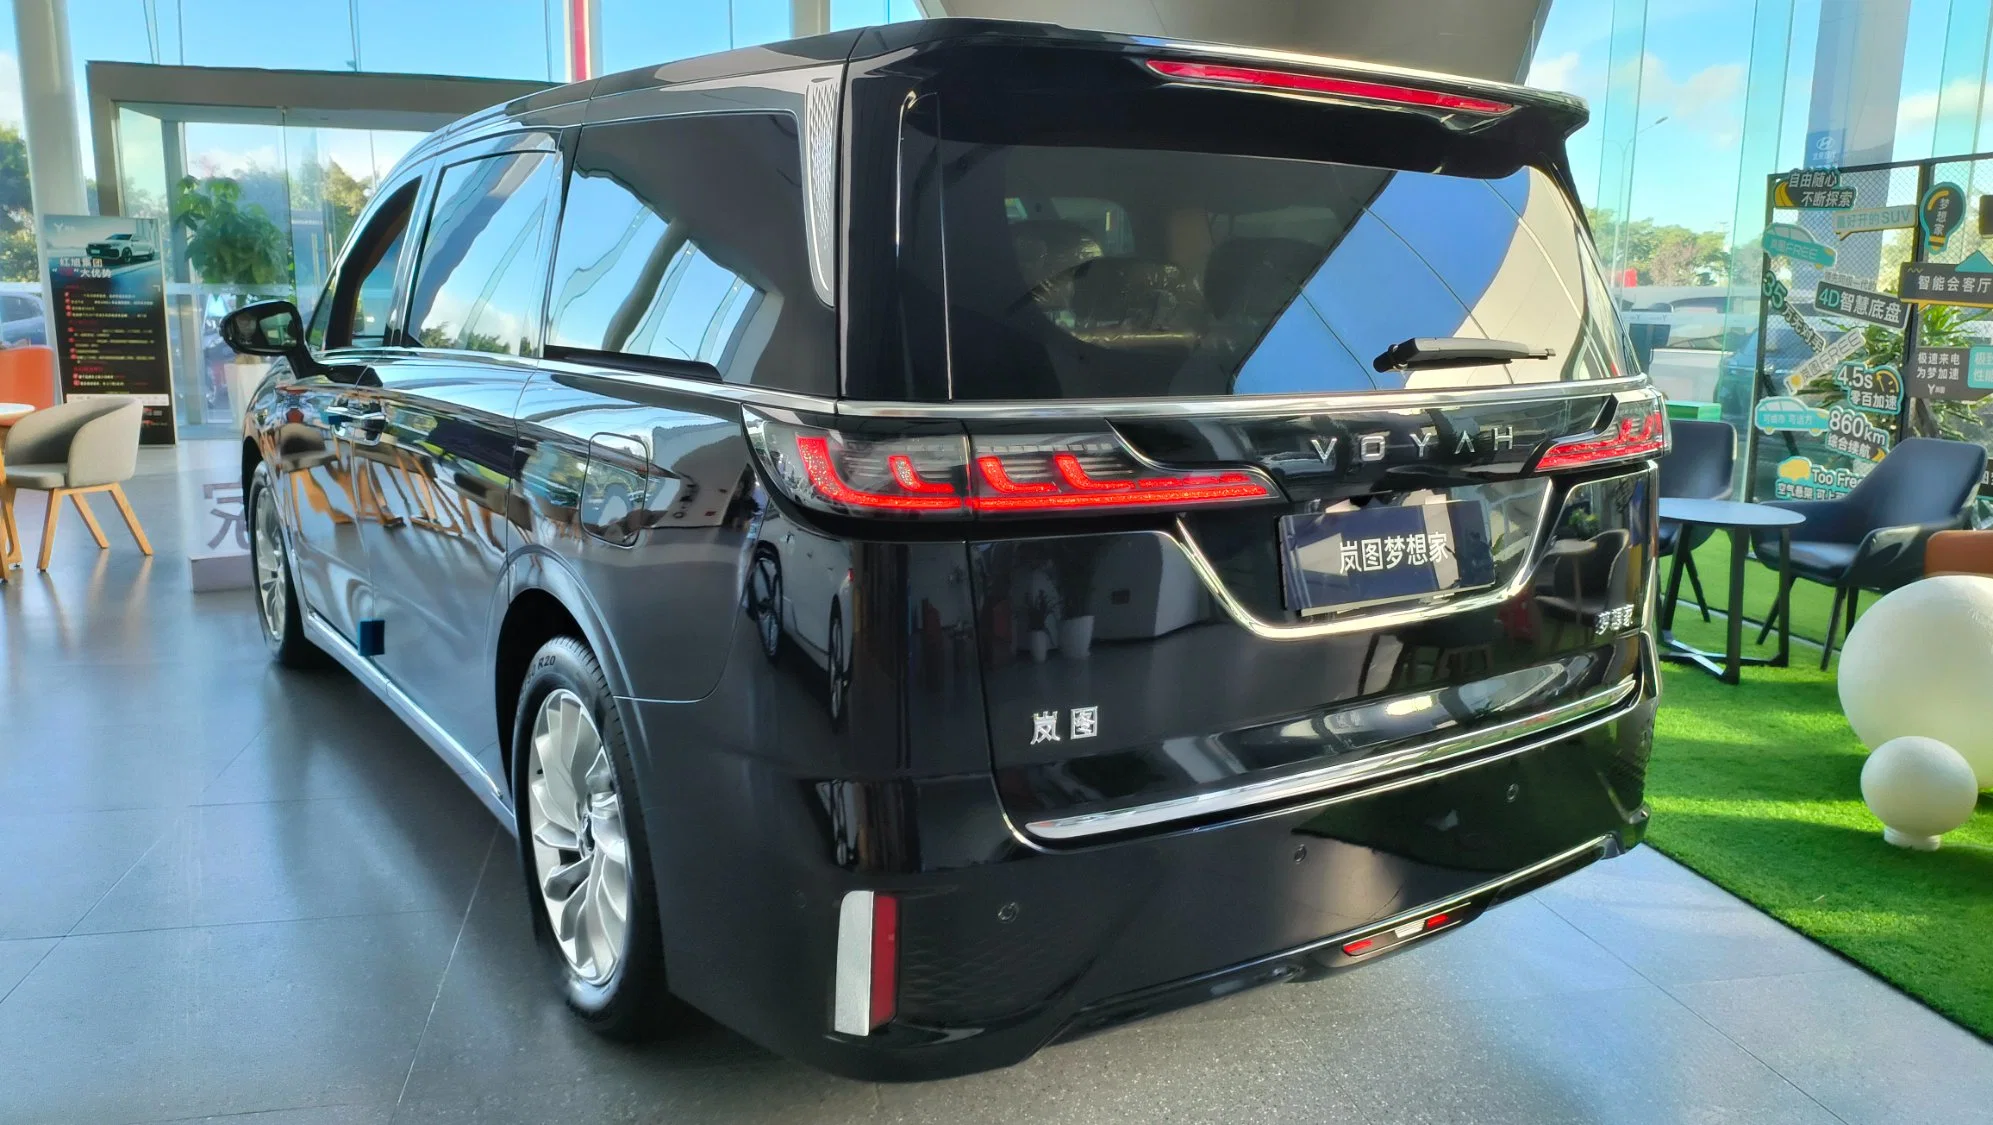 Voyah Dreamer 2022 Low-Carbon Version Elite Version EV Cars MPV New Second Hand Vehicle with 7 Seats